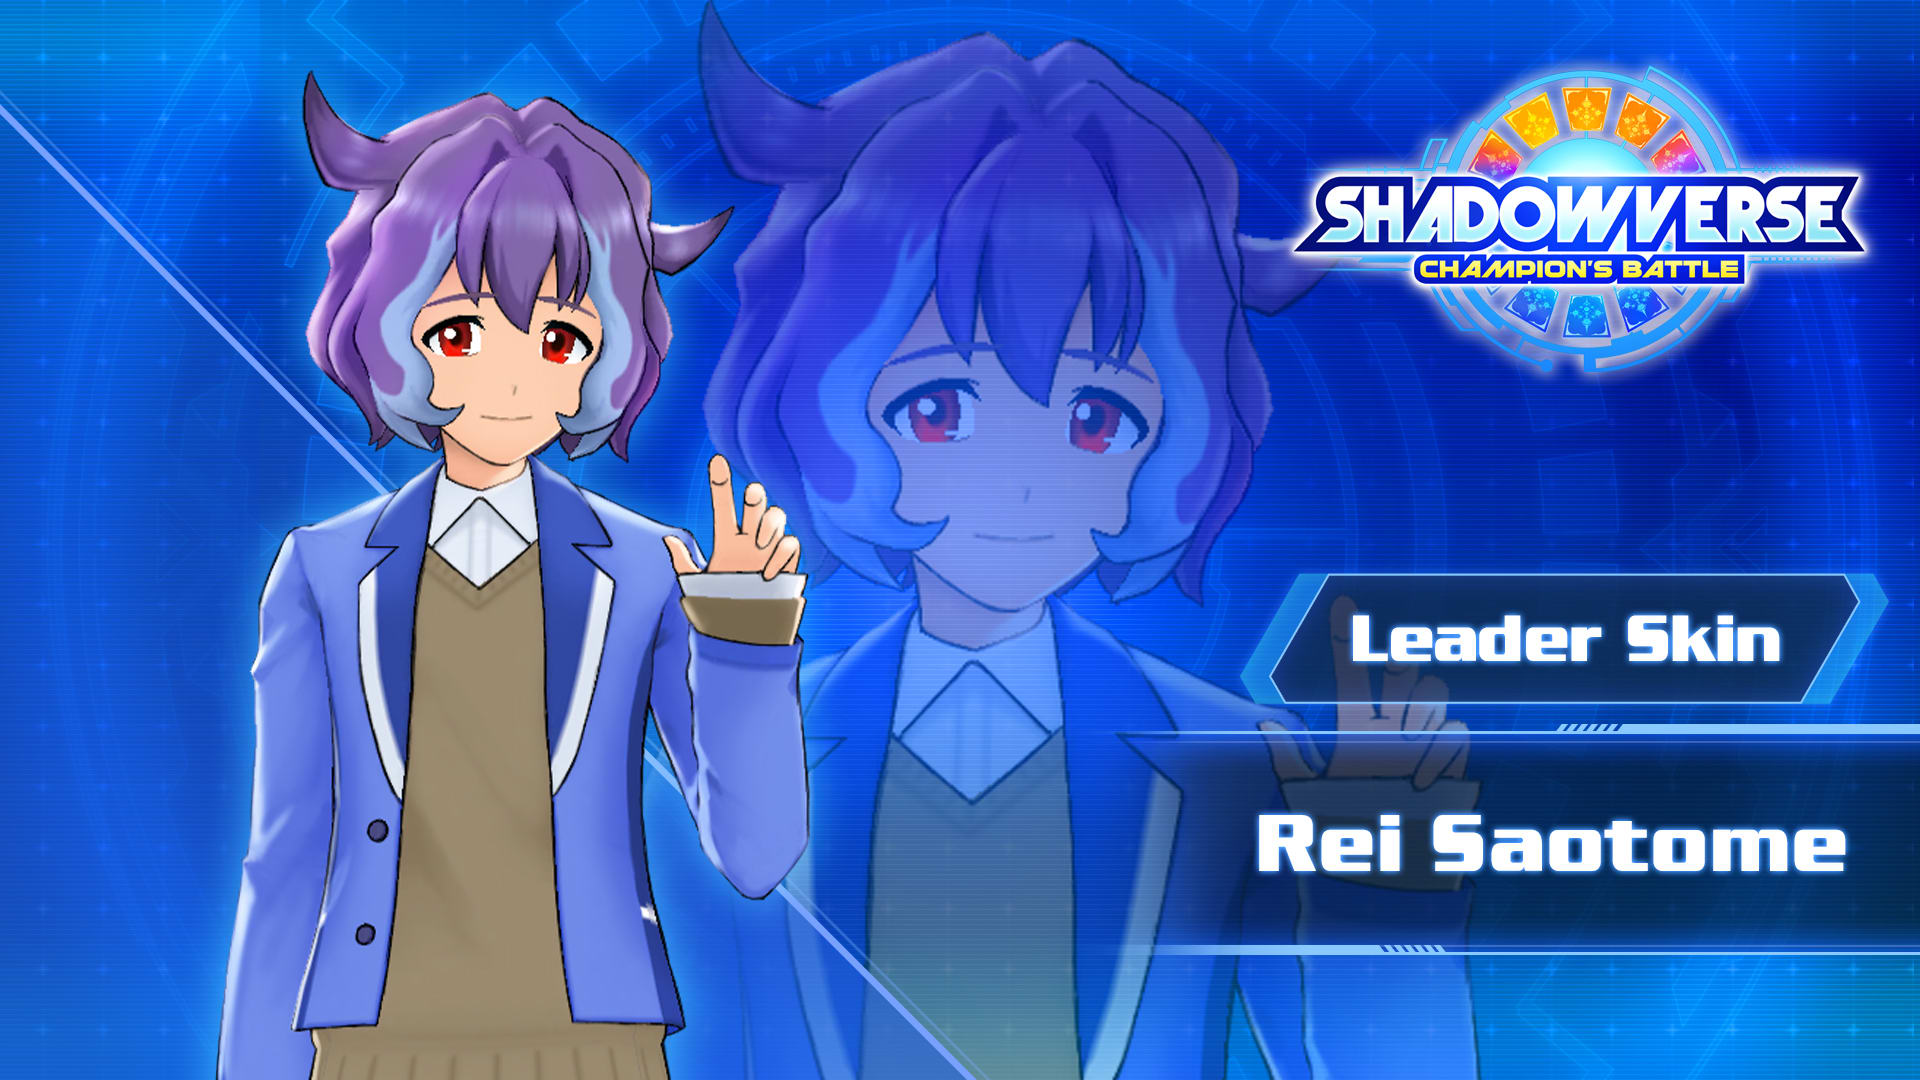 Leader Skin: "Rei Saotome"